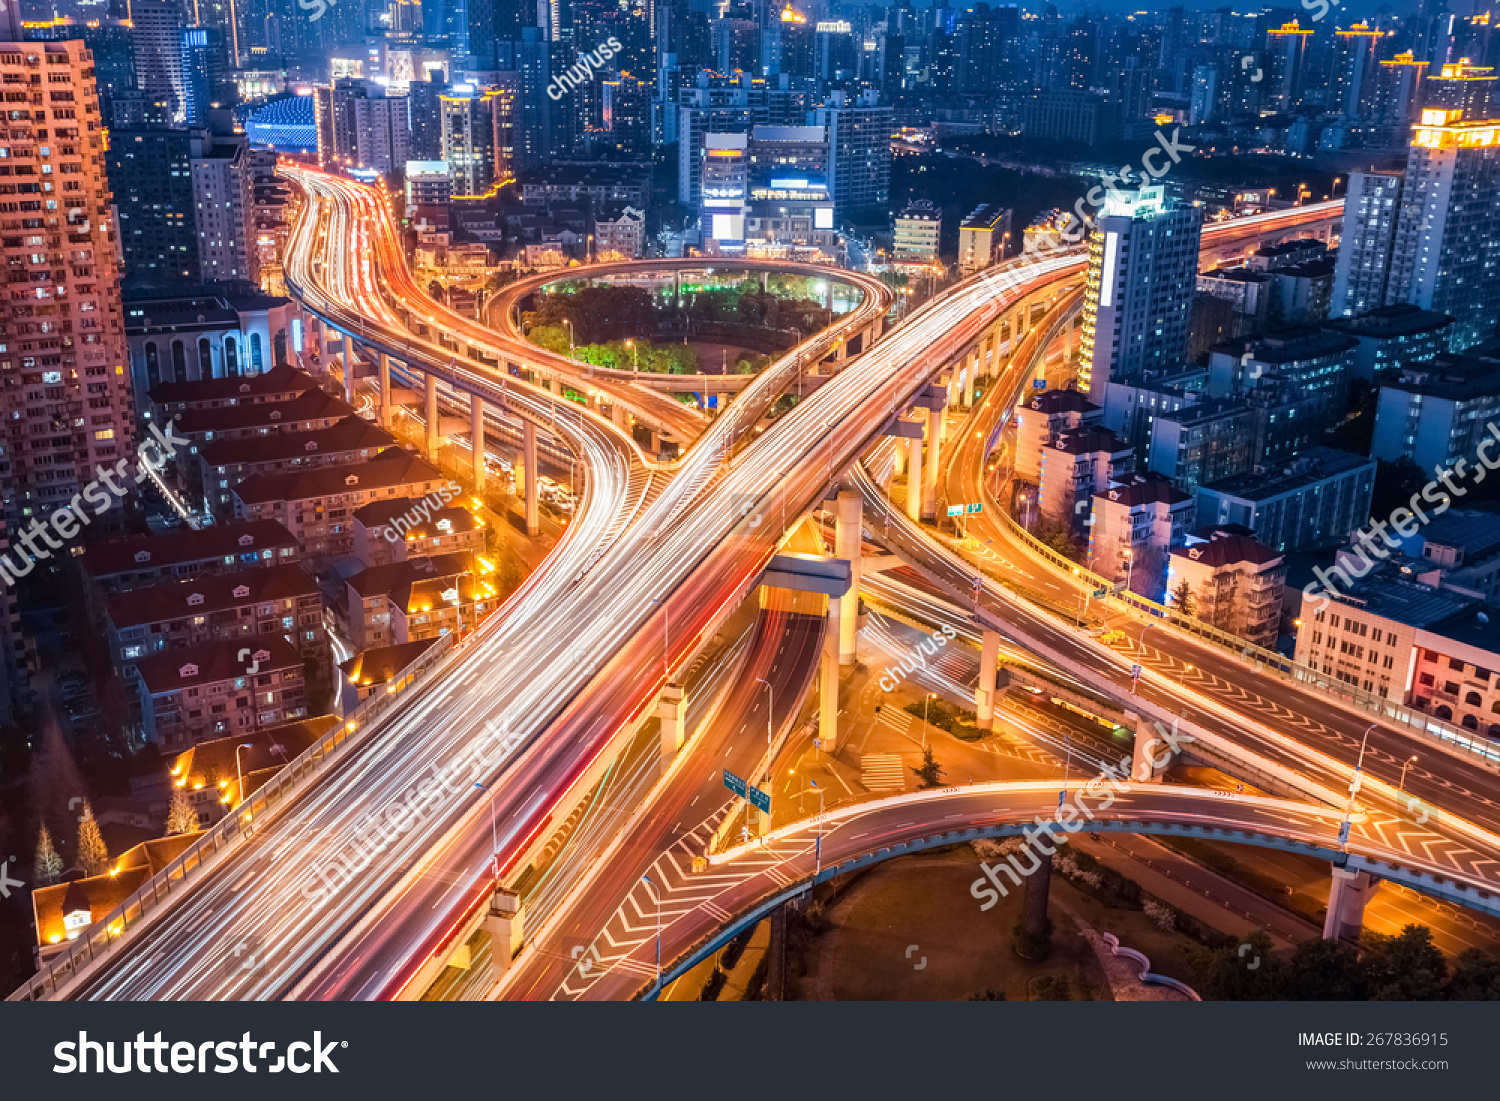 city interchange closeup at night , beautiful transport infrastructure background #267836915